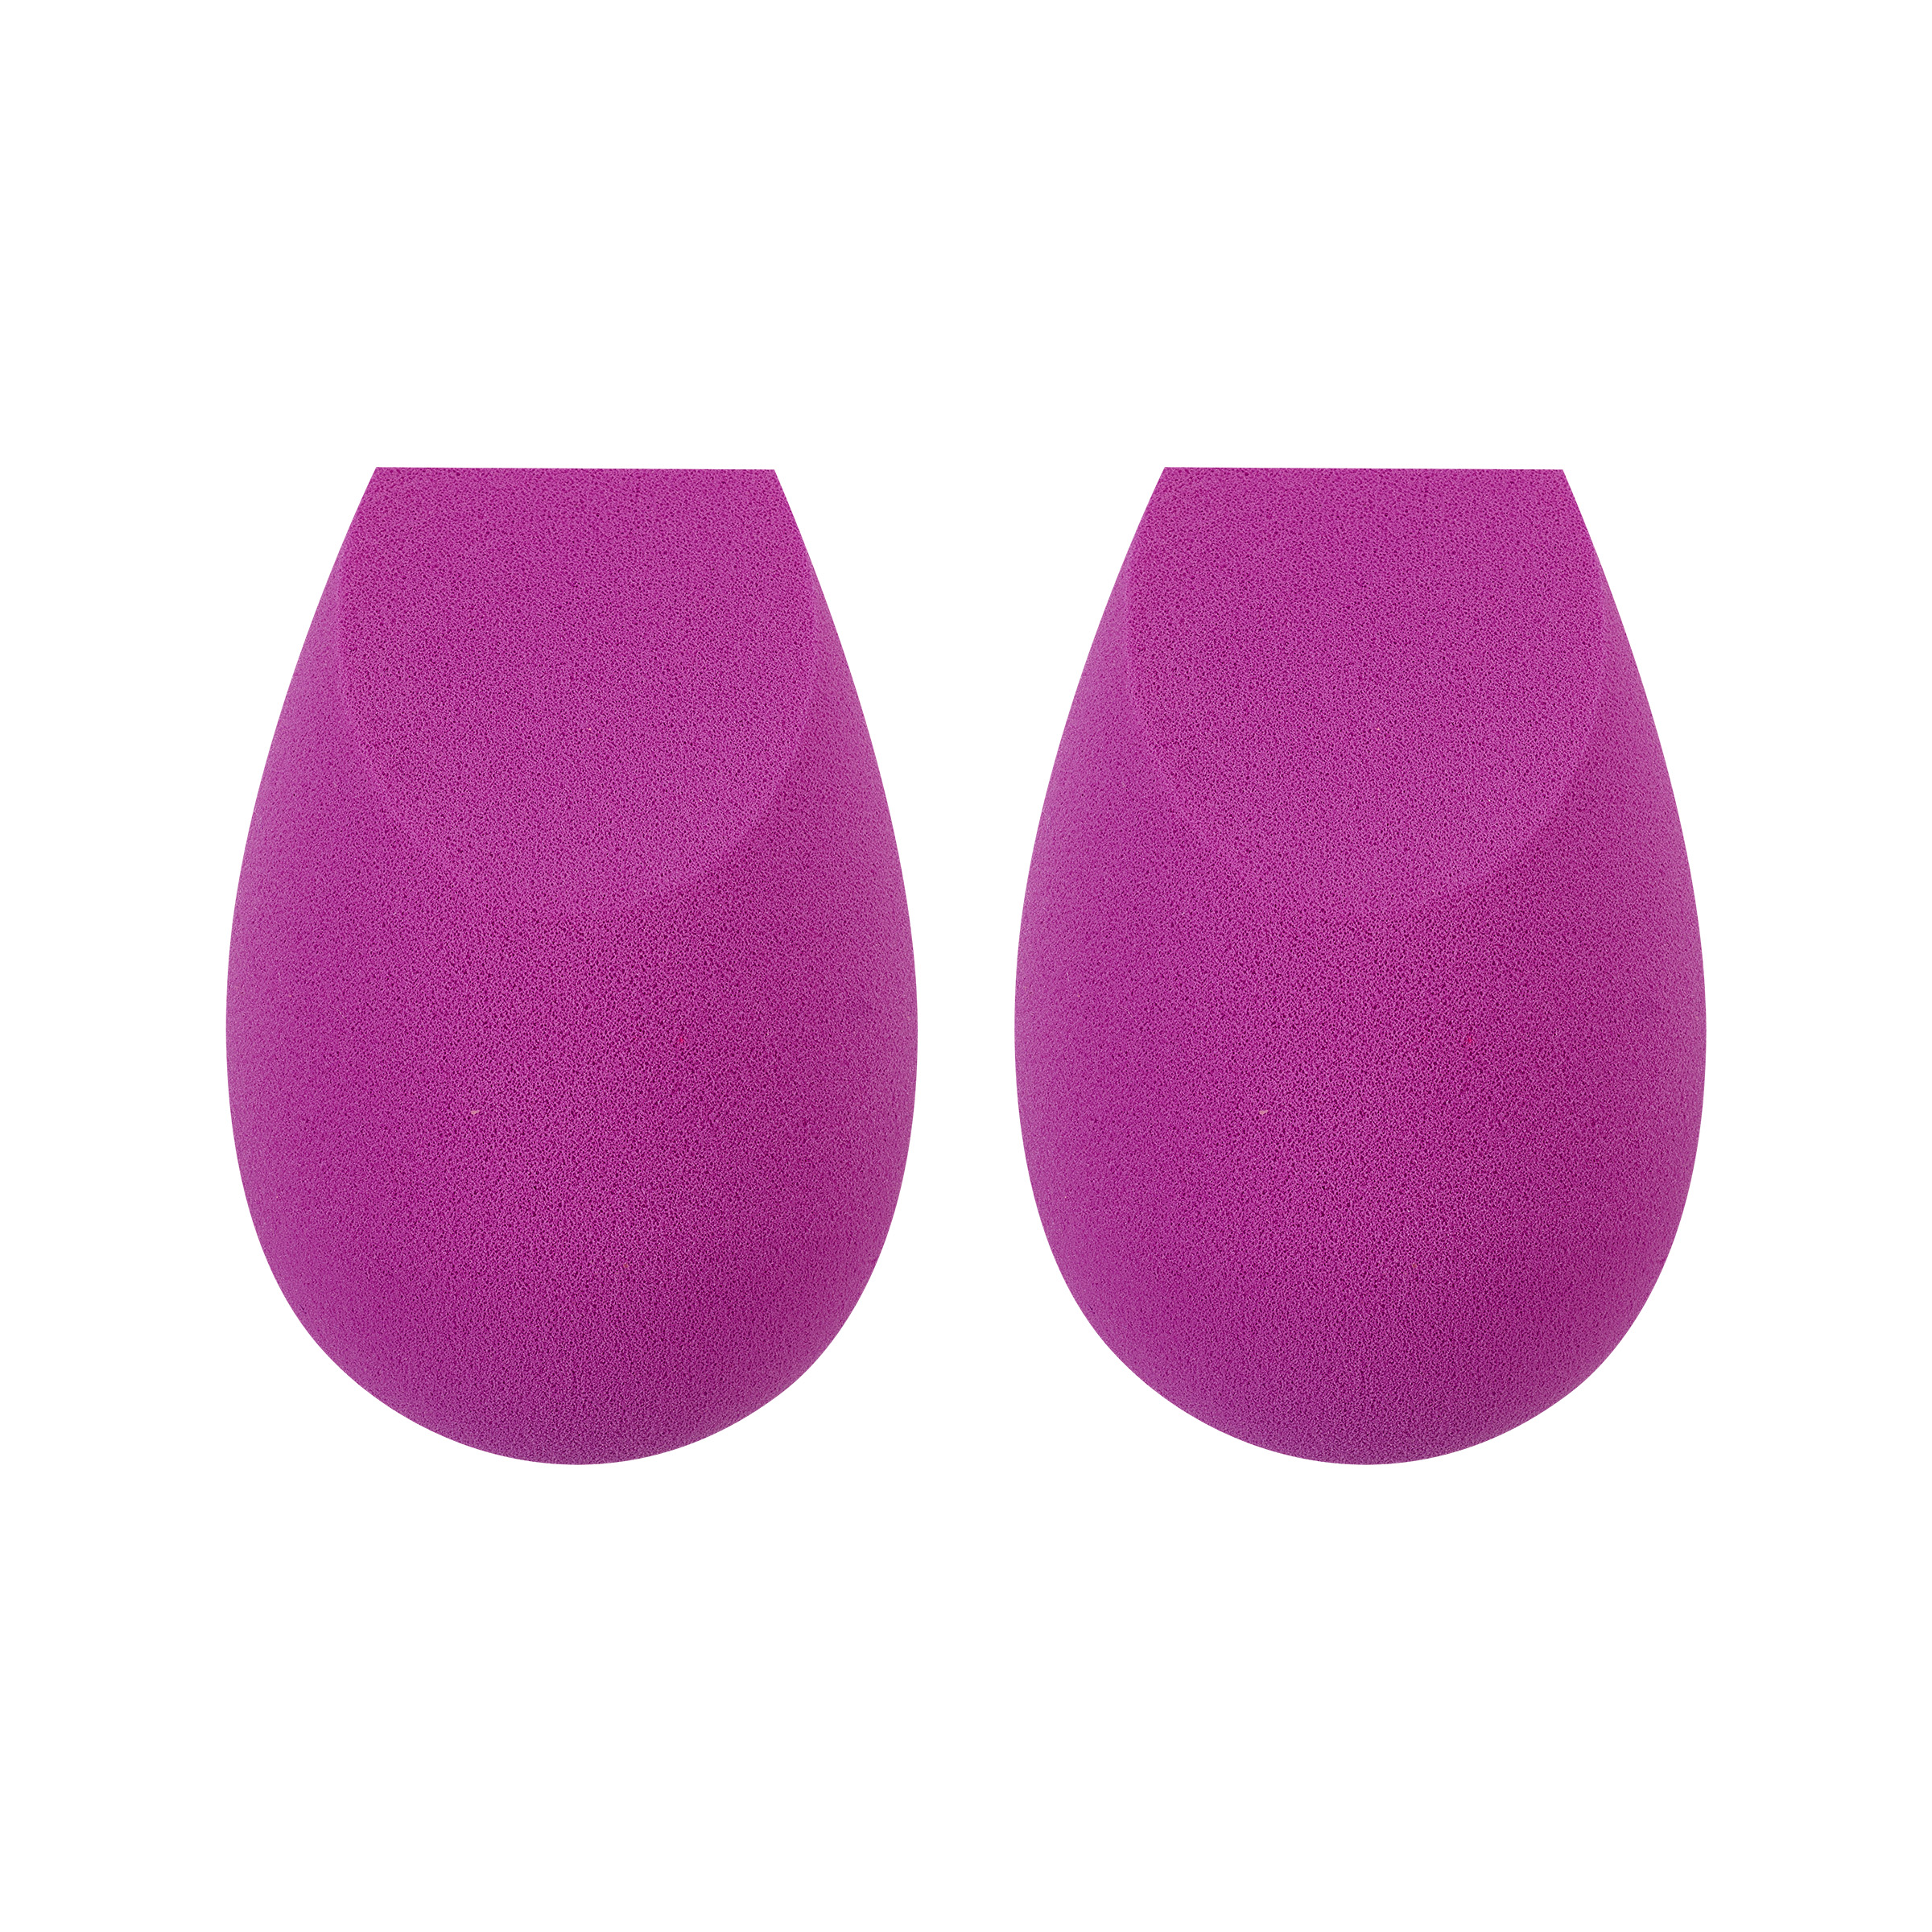 EcoTools Bioblender Makeup Sponge Duo, for Liquid and Cream Foundation, Purple, 2 Count - image 4 of 18